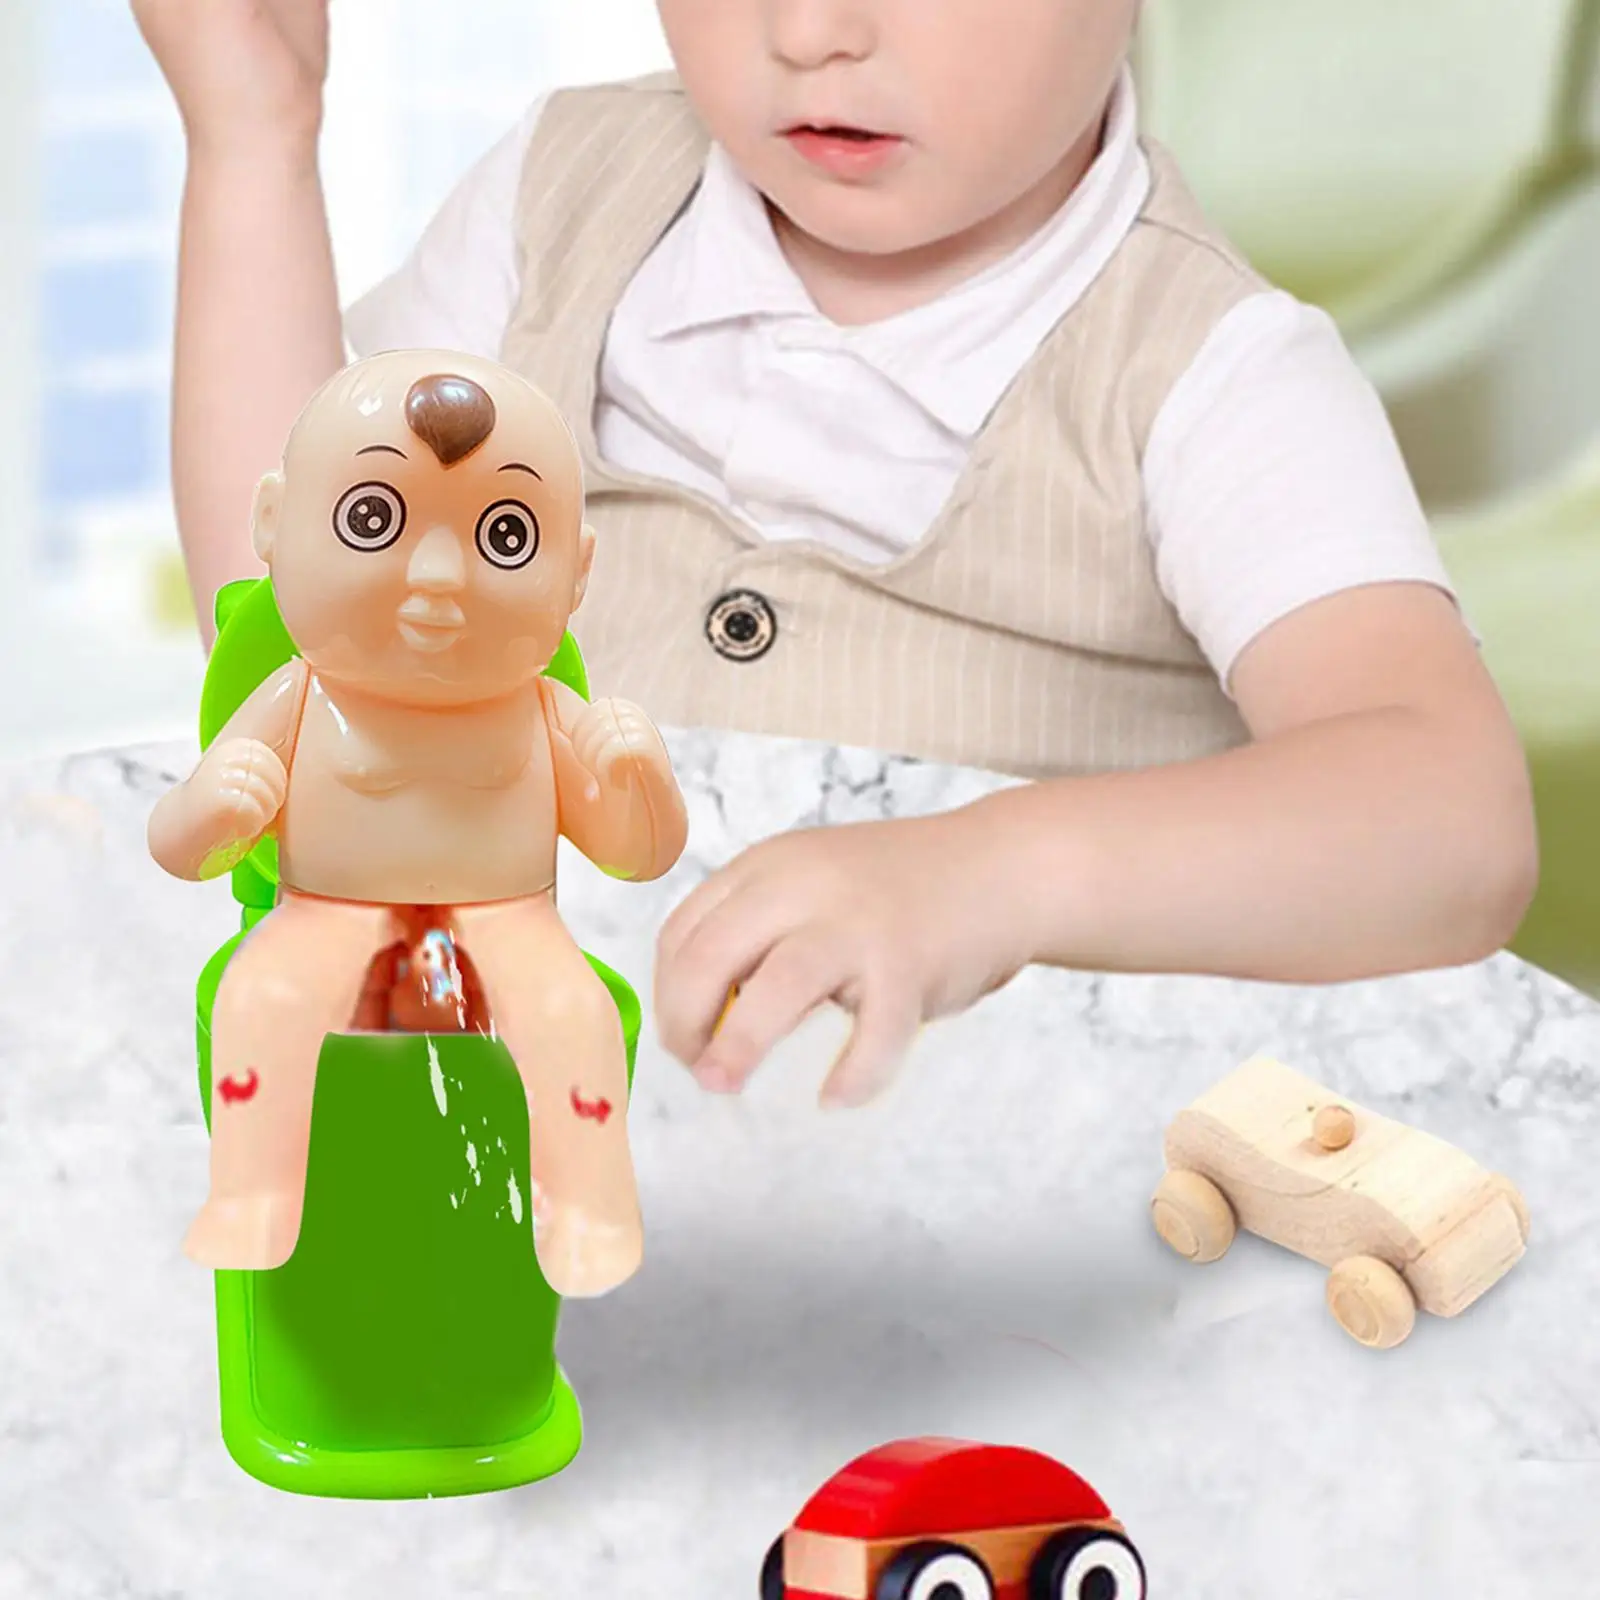 Strange Peeing Boy Squirter Toy Hilarious Prankster Joke Stuff April Fool`S Day Toys Water Squirting Prank Toy for Children Kids